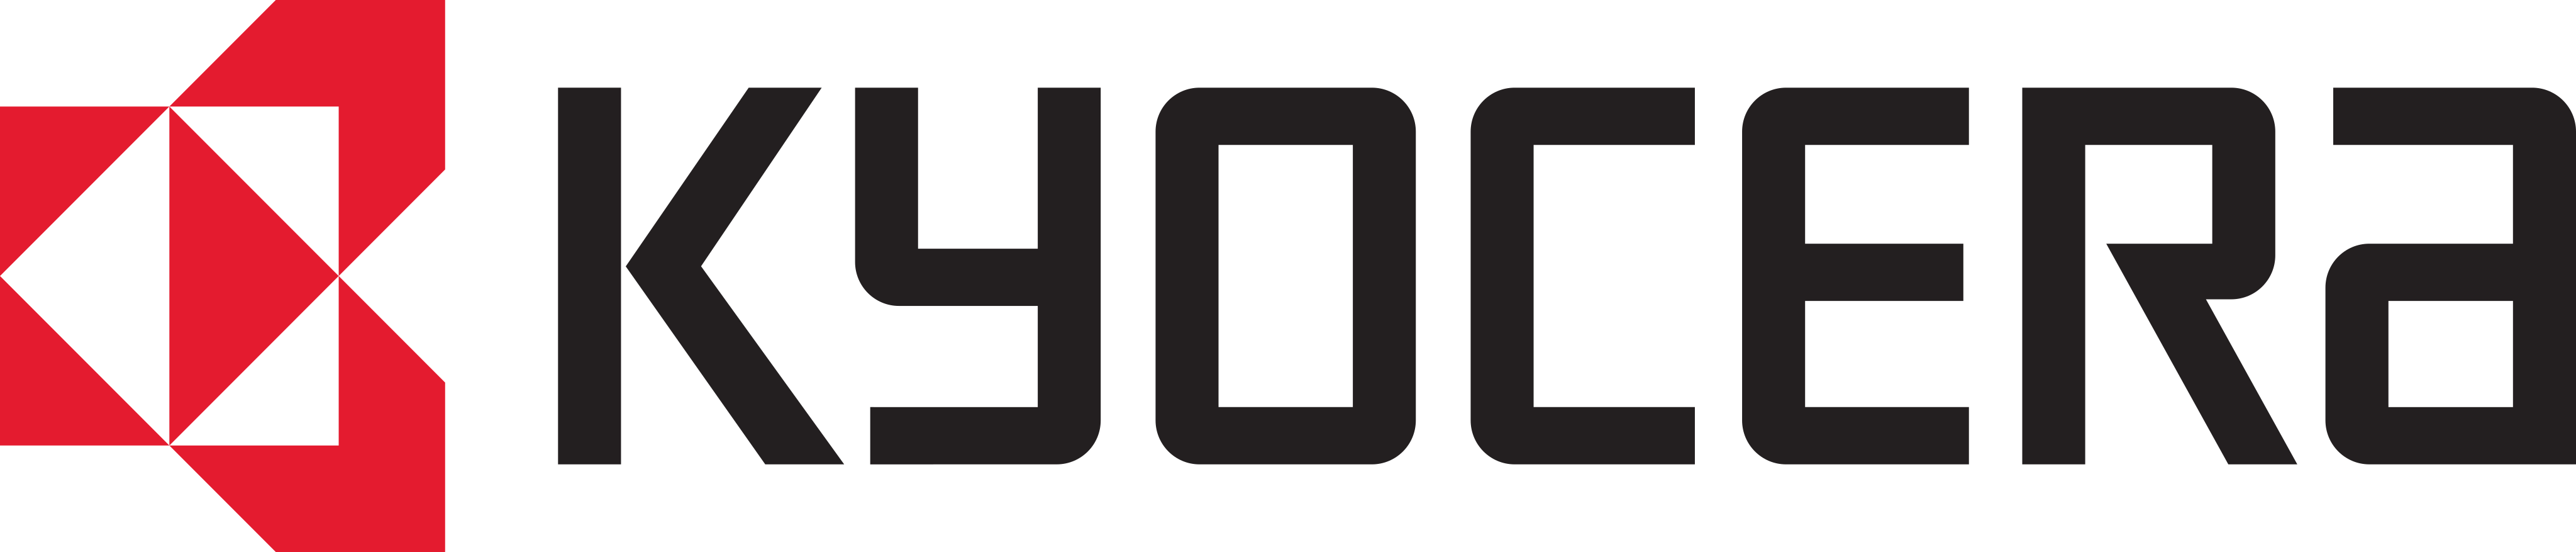 Kyocera Logo.